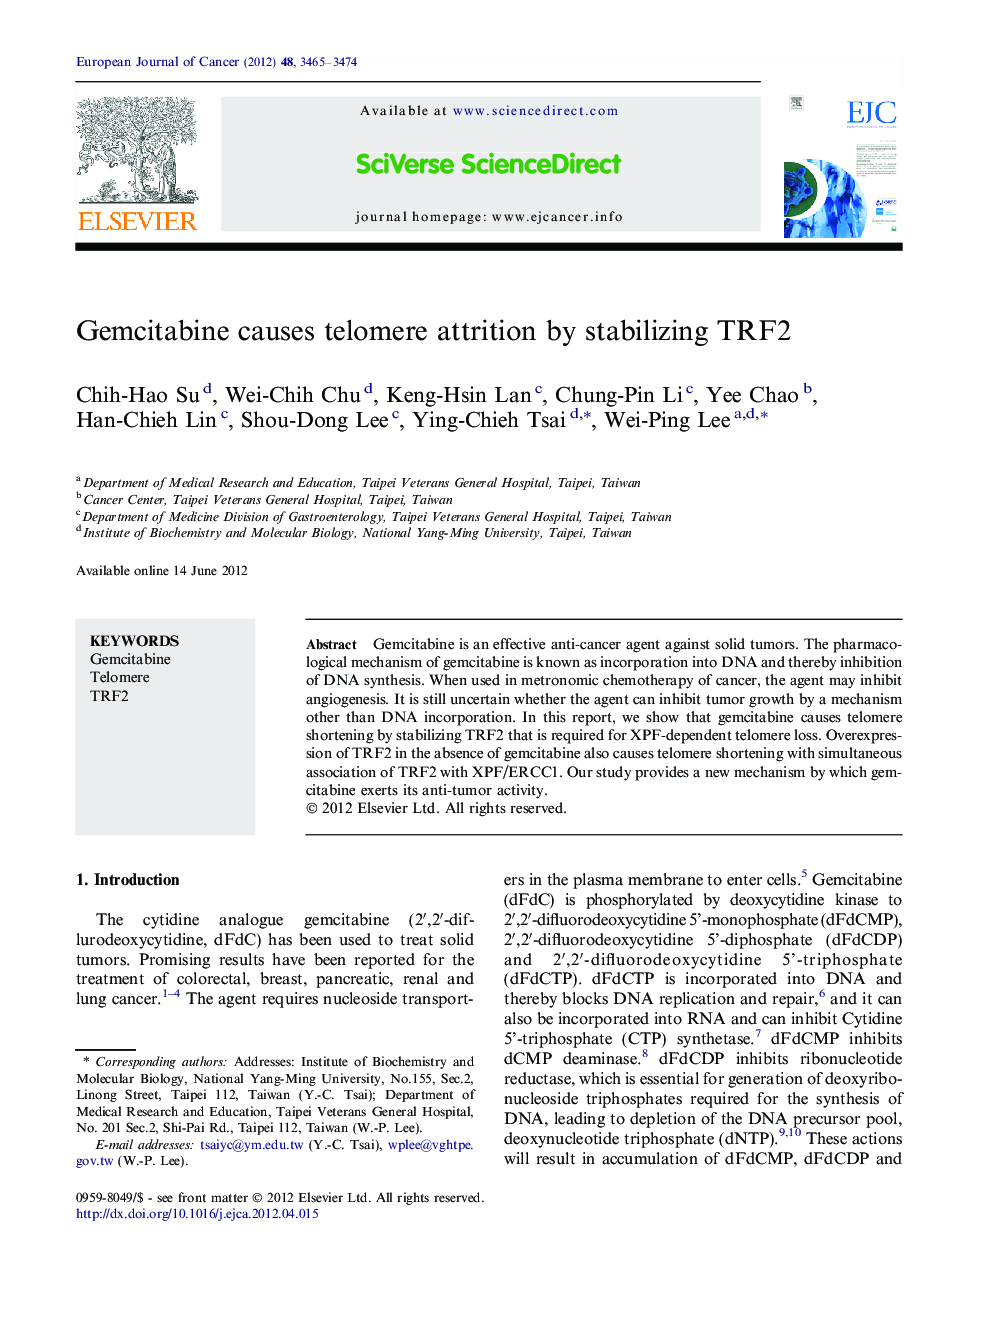 Gemcitabine causes telomere attrition by stabilizing TRF2